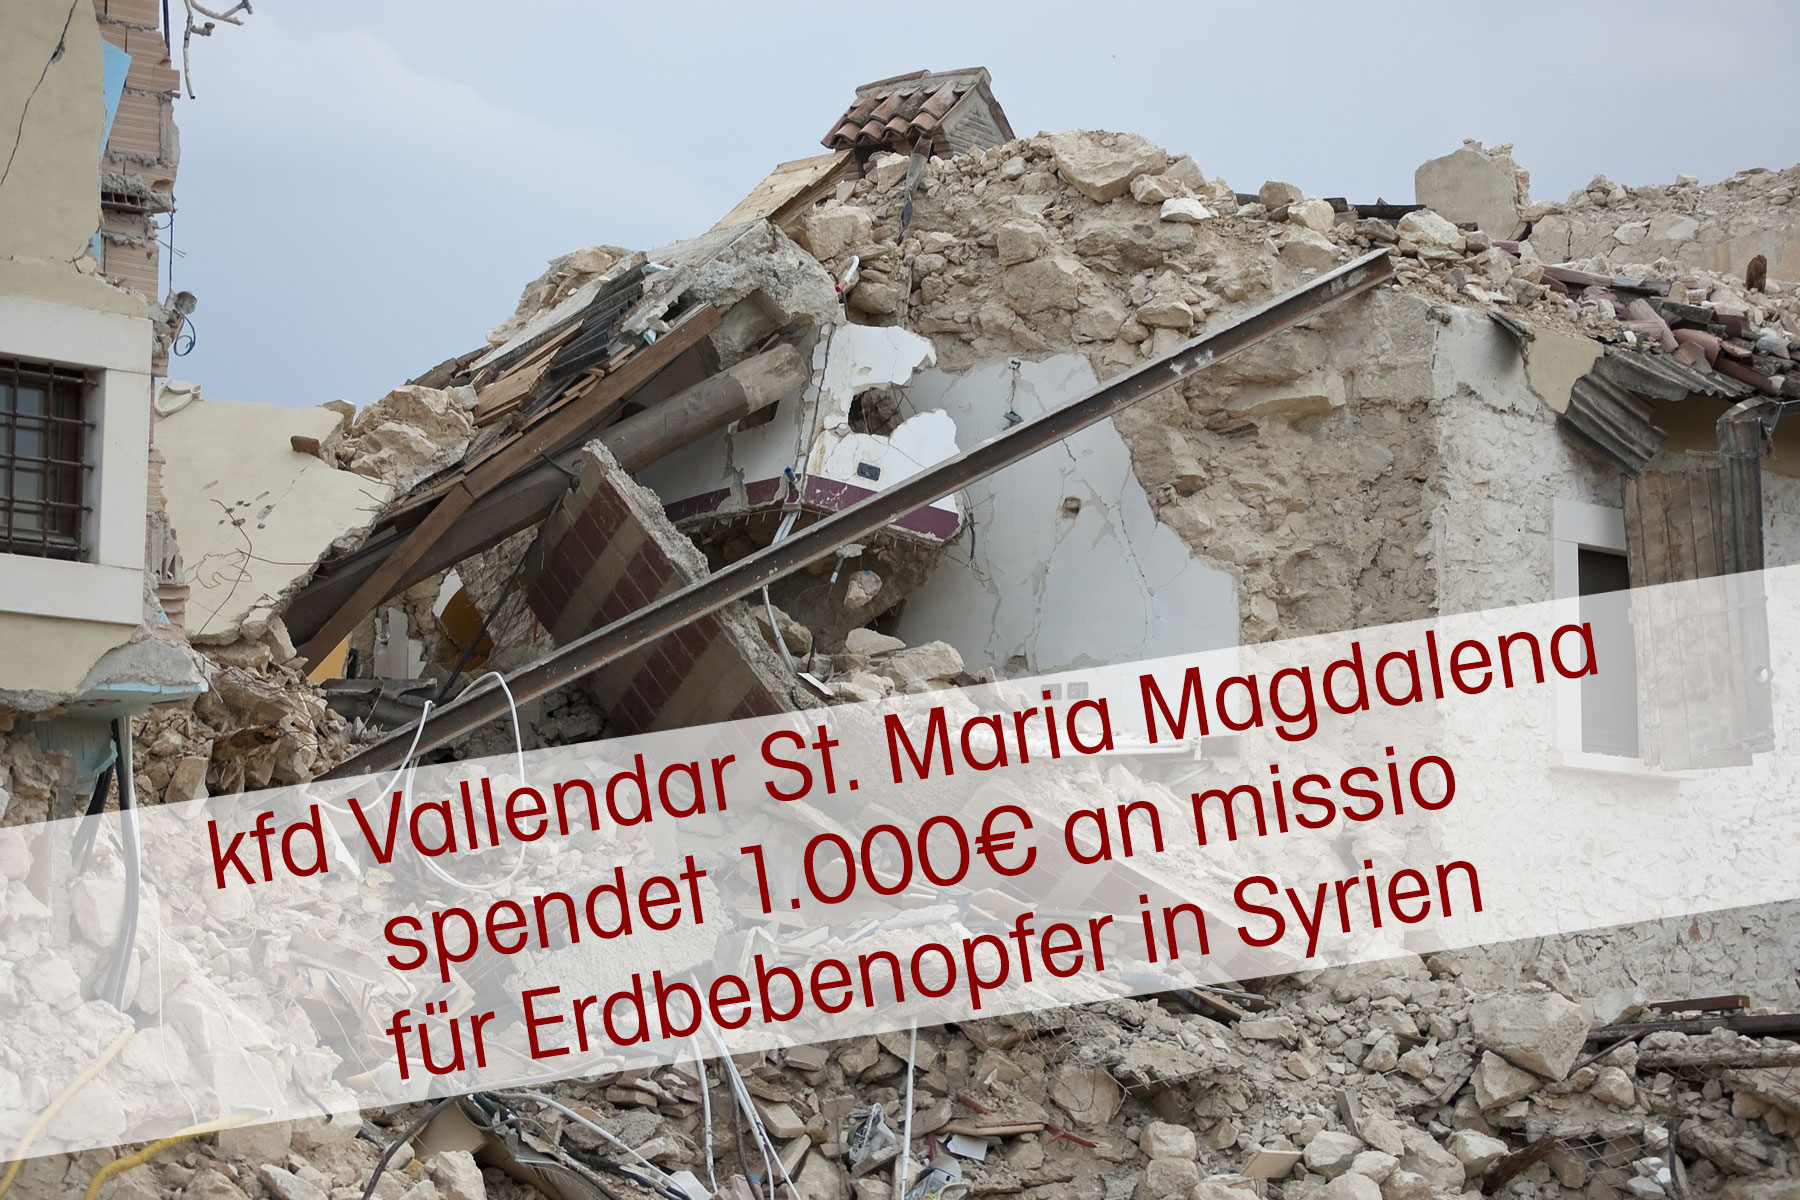 kfd Vallendar St. Maria Magdalena spendet für Erdbebenopfer in Syrien (Foto: Angelo_Giordano, pixabay)